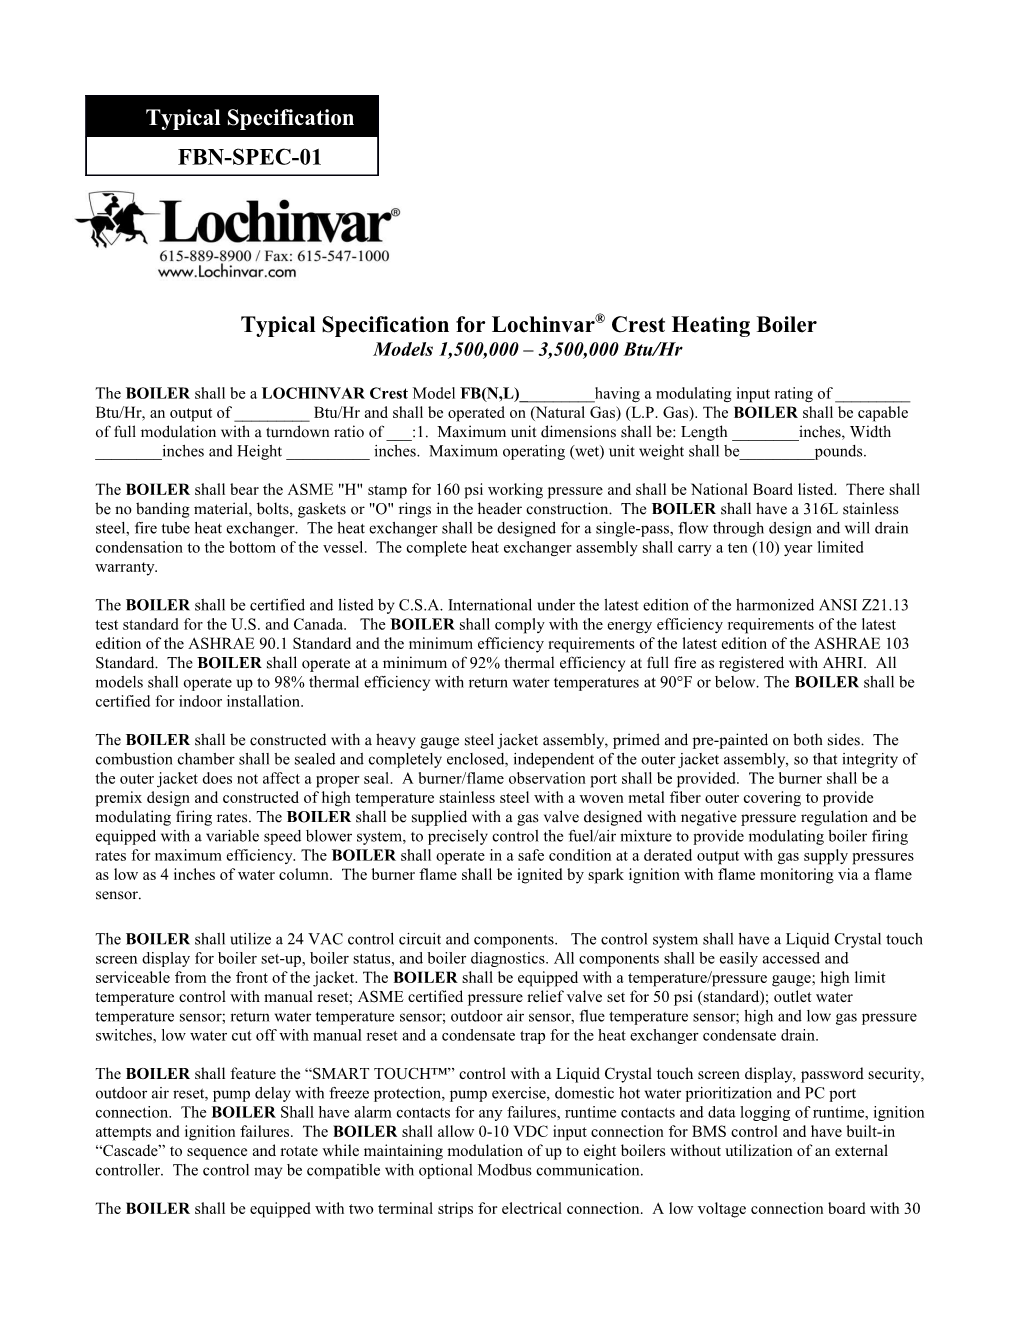 Typicalspecificationfor Lochinvar Crestheating Boiler